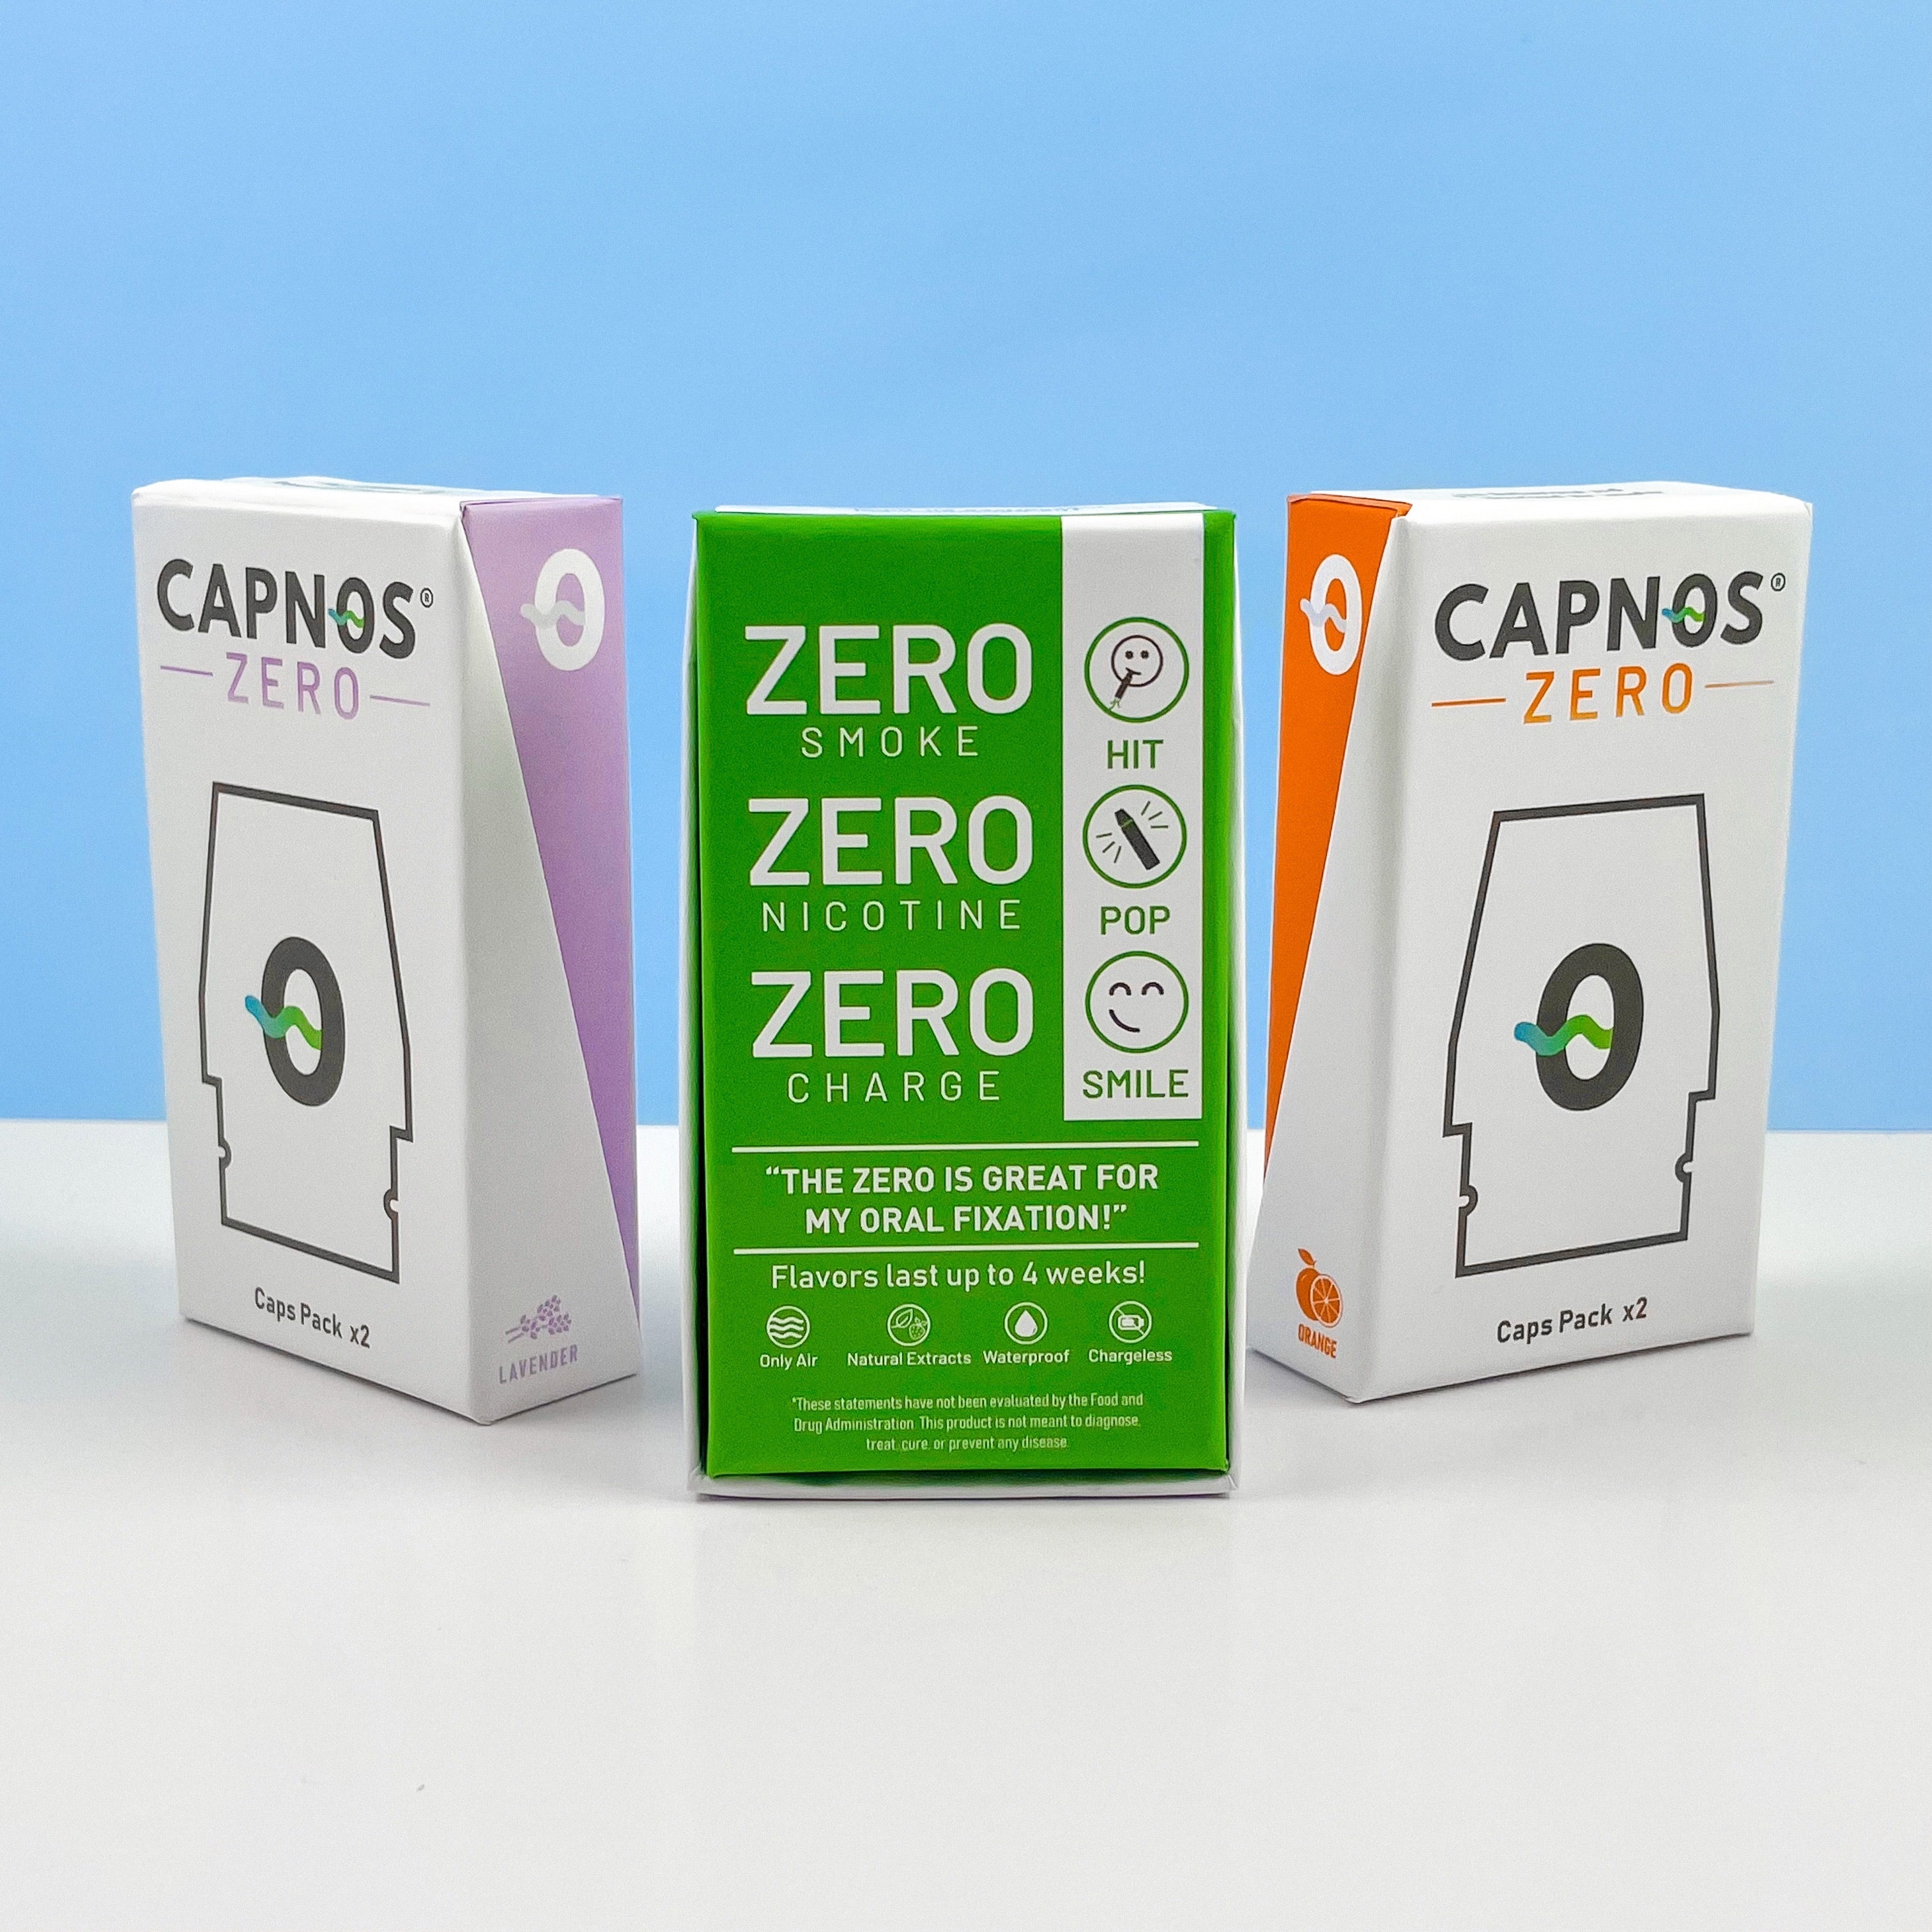 The CAPNOS® Cap Pack Bundle (NEW Monochrome Cap Packs)